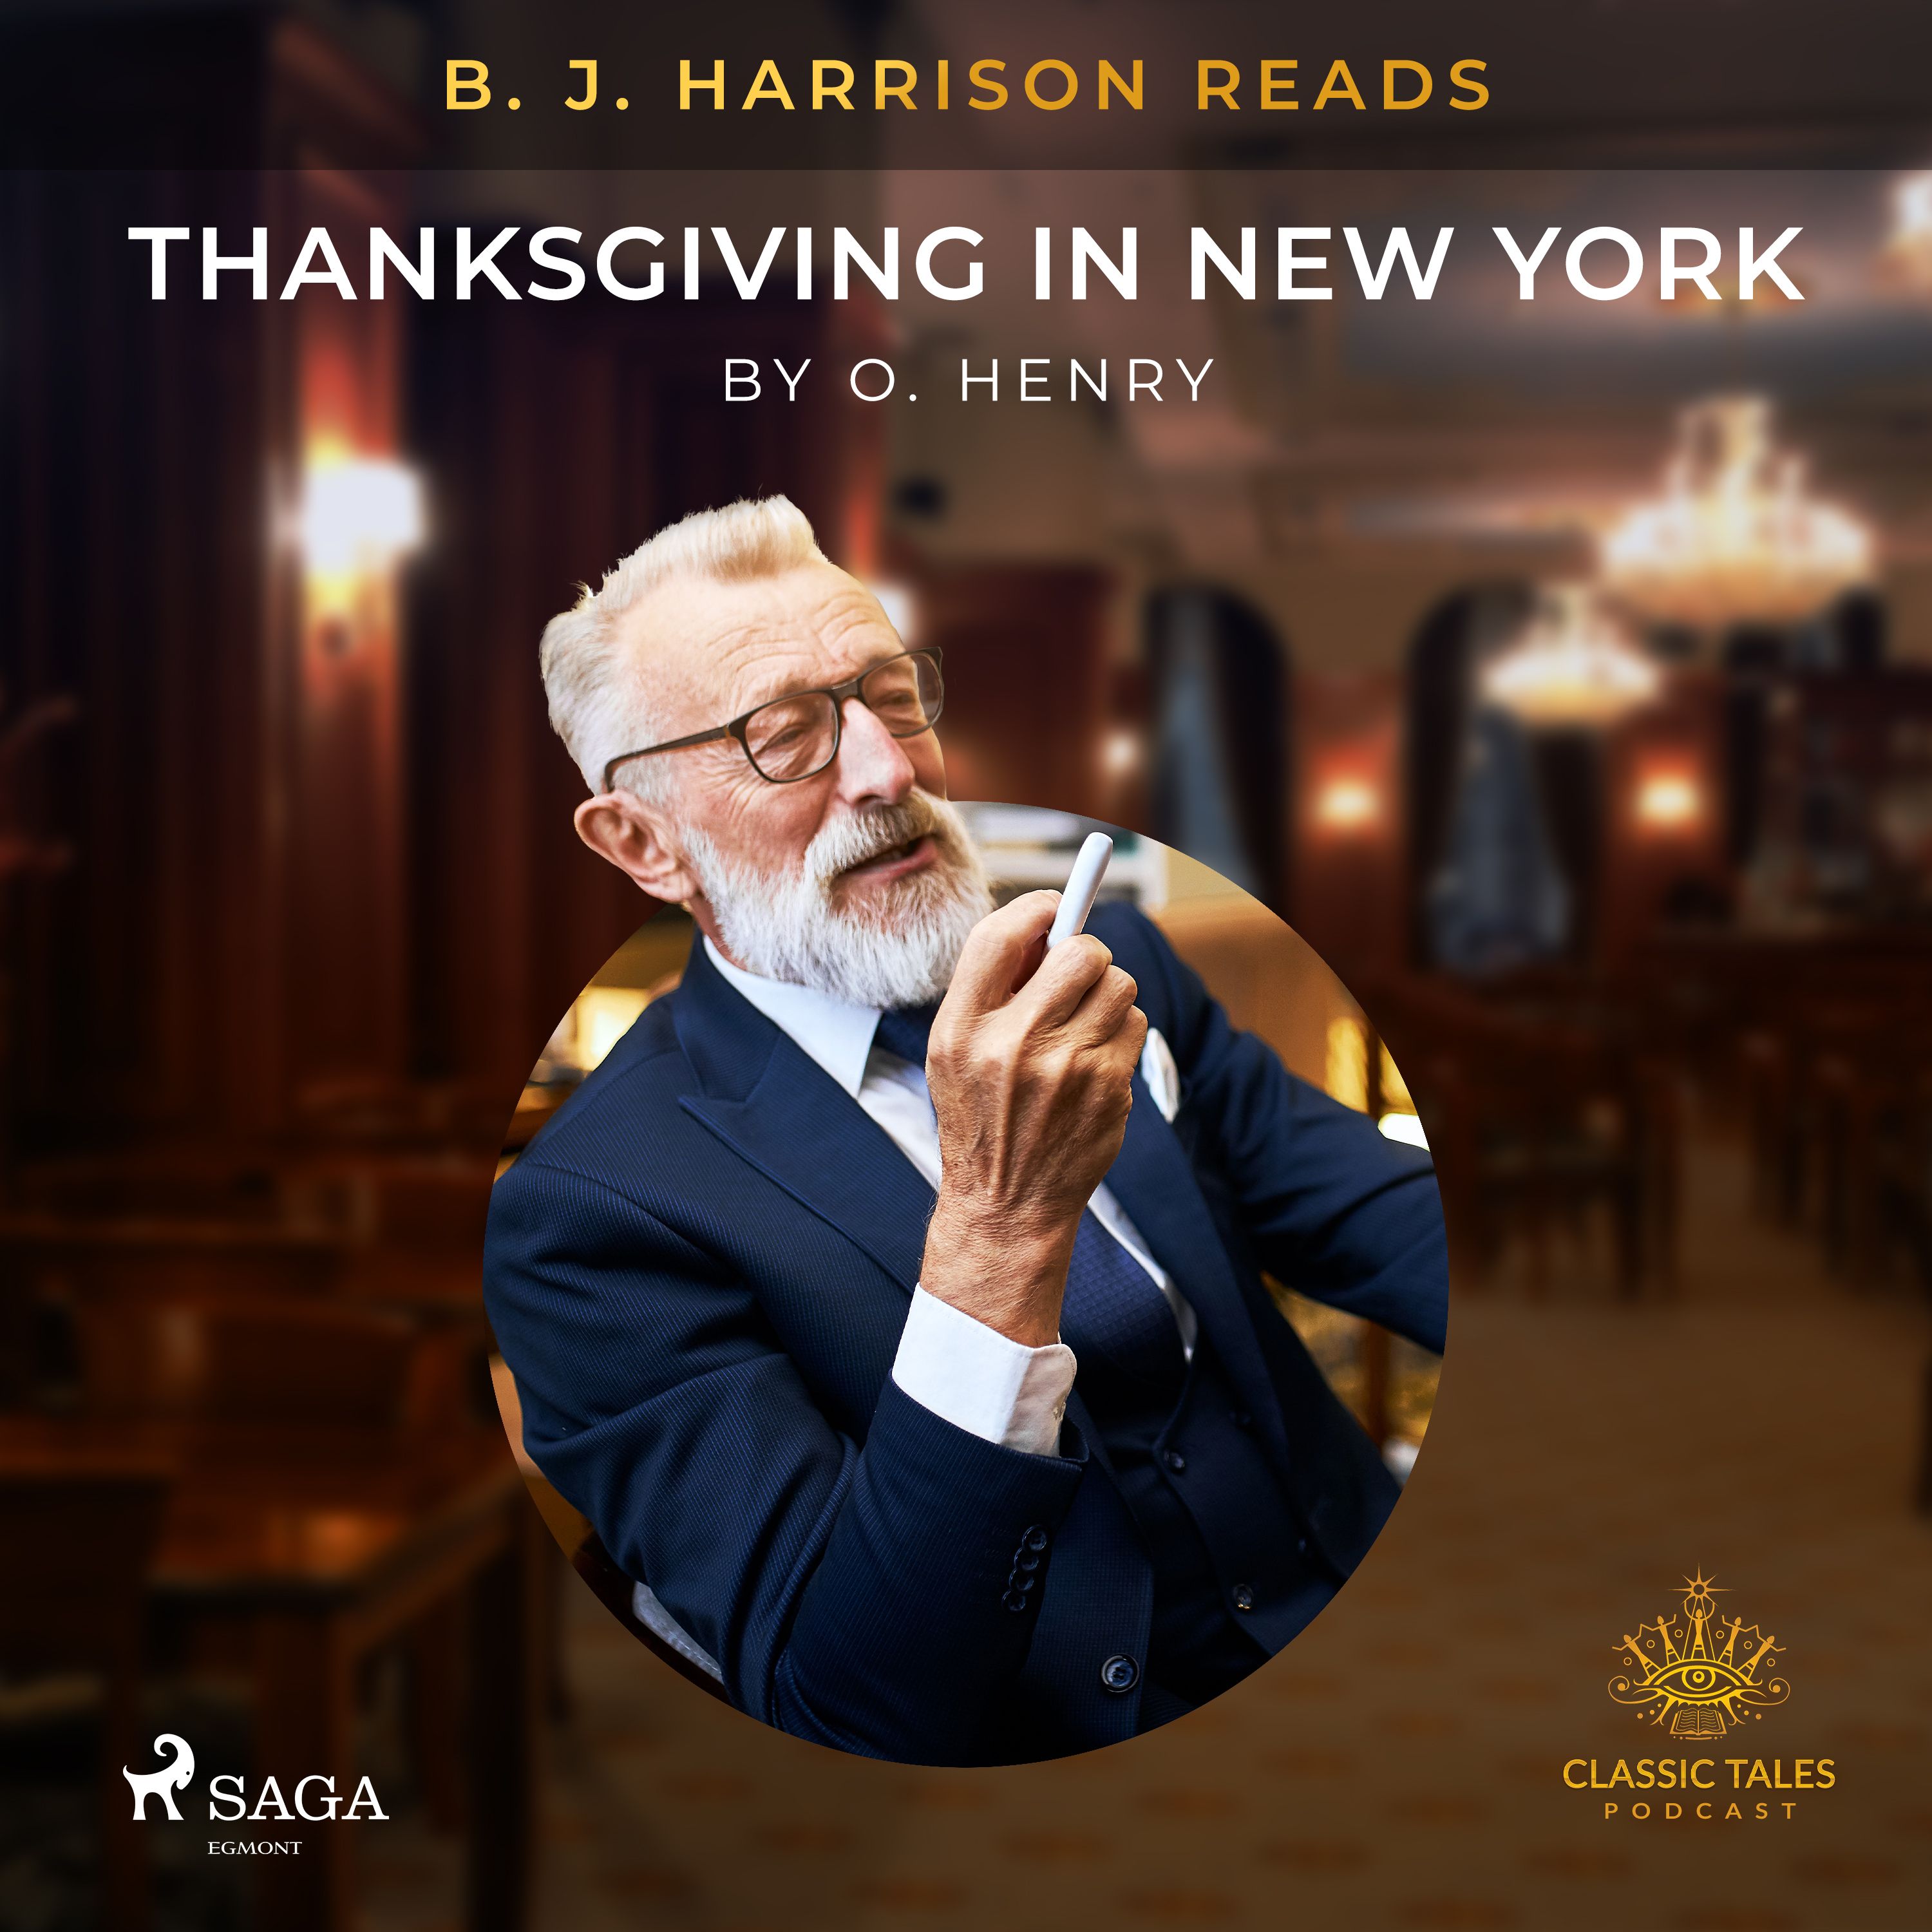 B. J. Harrison Reads Thanksgiving in New York, ljudbok av O. Henry